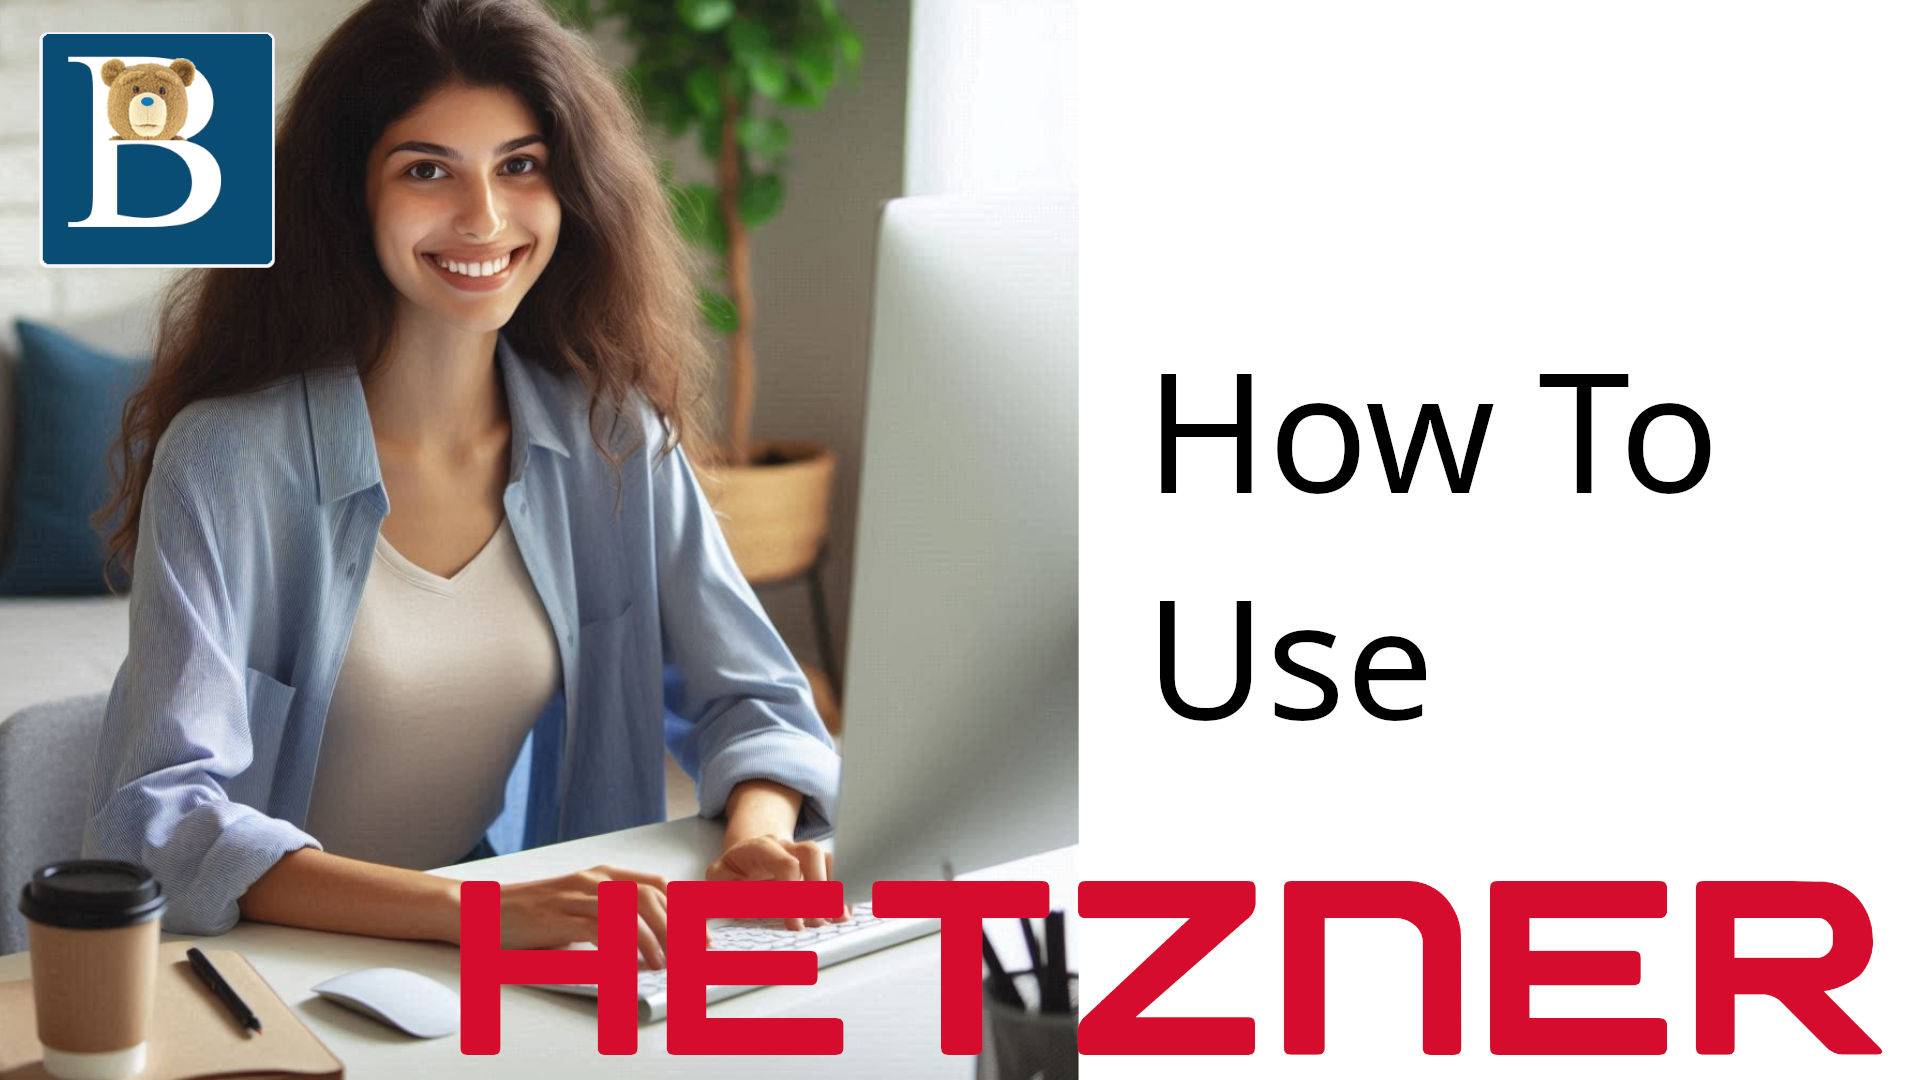 Hetzner tutorial Cloud deploy and login Volume LB Networks etc